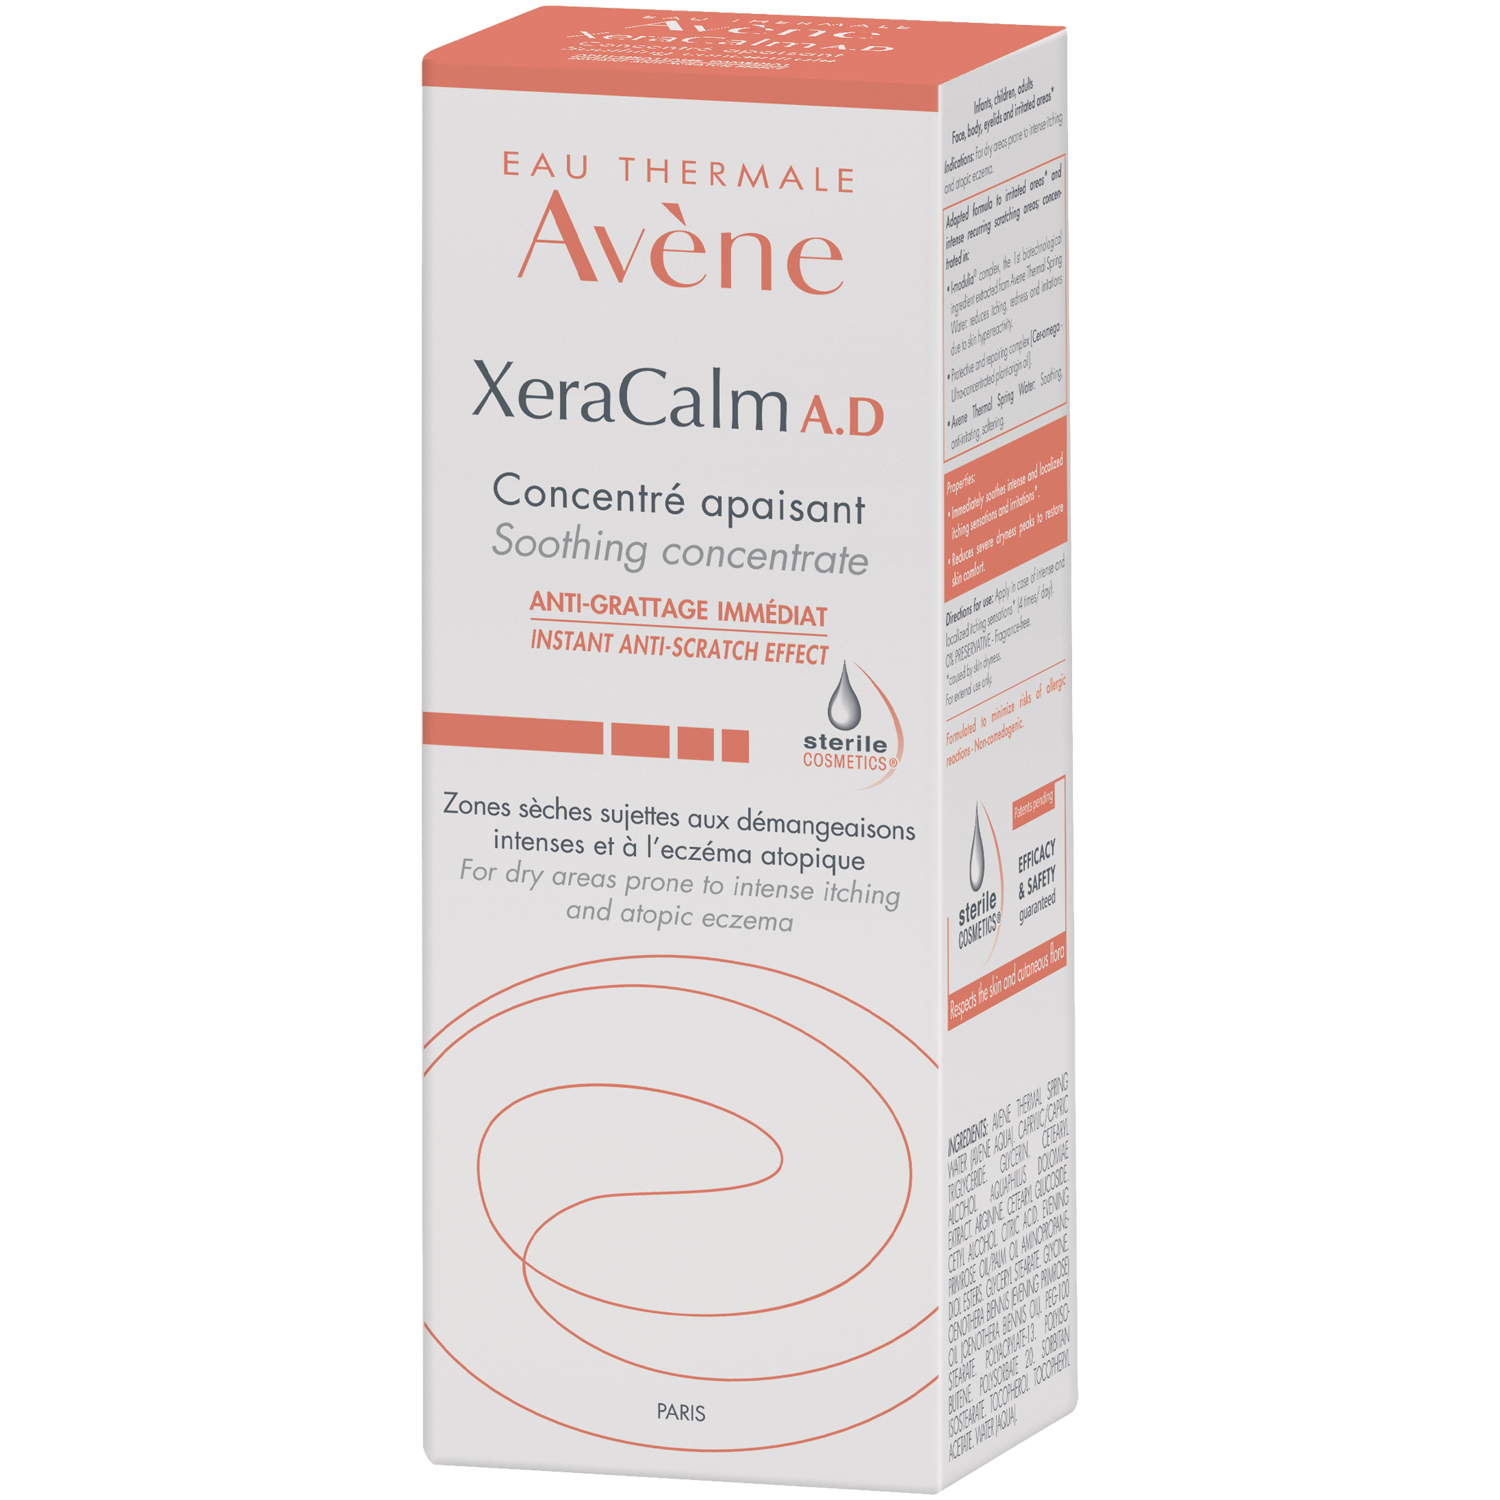 Avène Xeracalm A.D успокаивающий концентрат для лица, тела, век и раздраженных участков кожи, 50 мл